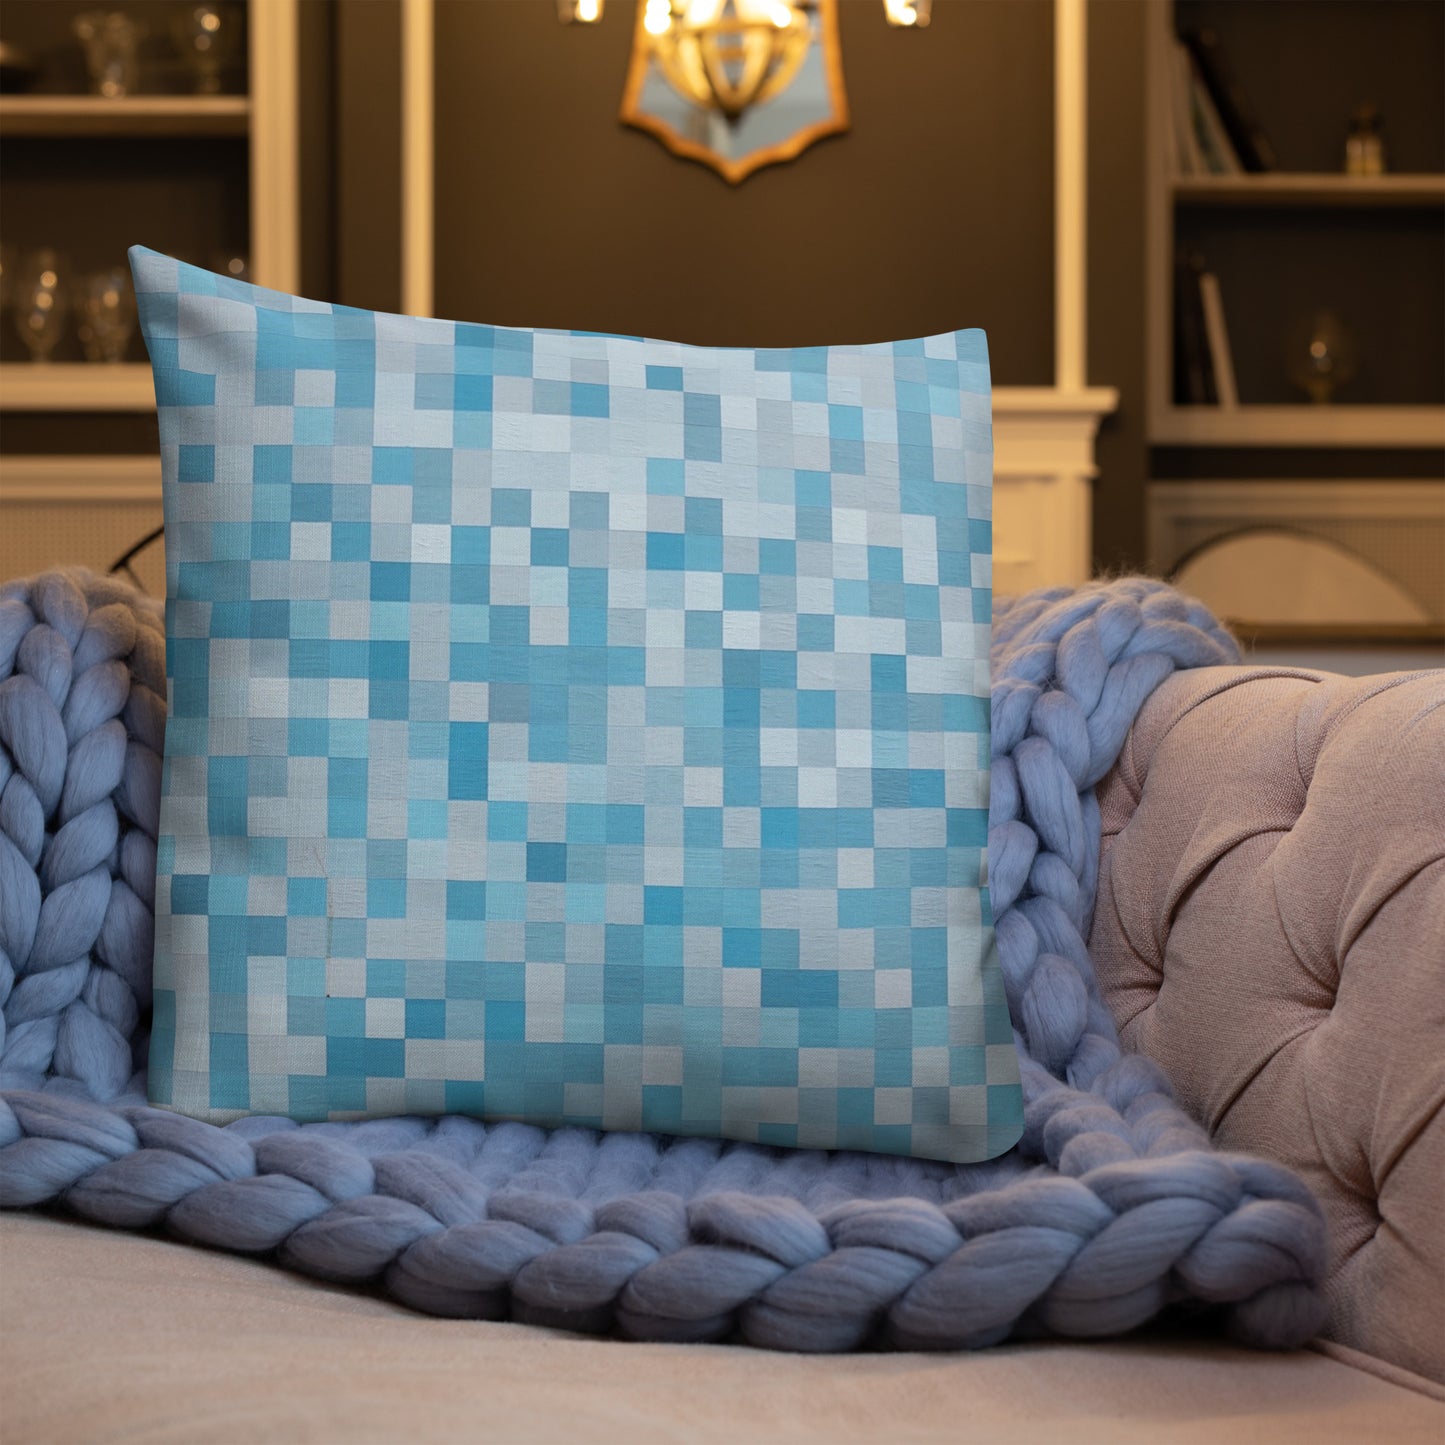 Pixel painting Premium Pillow